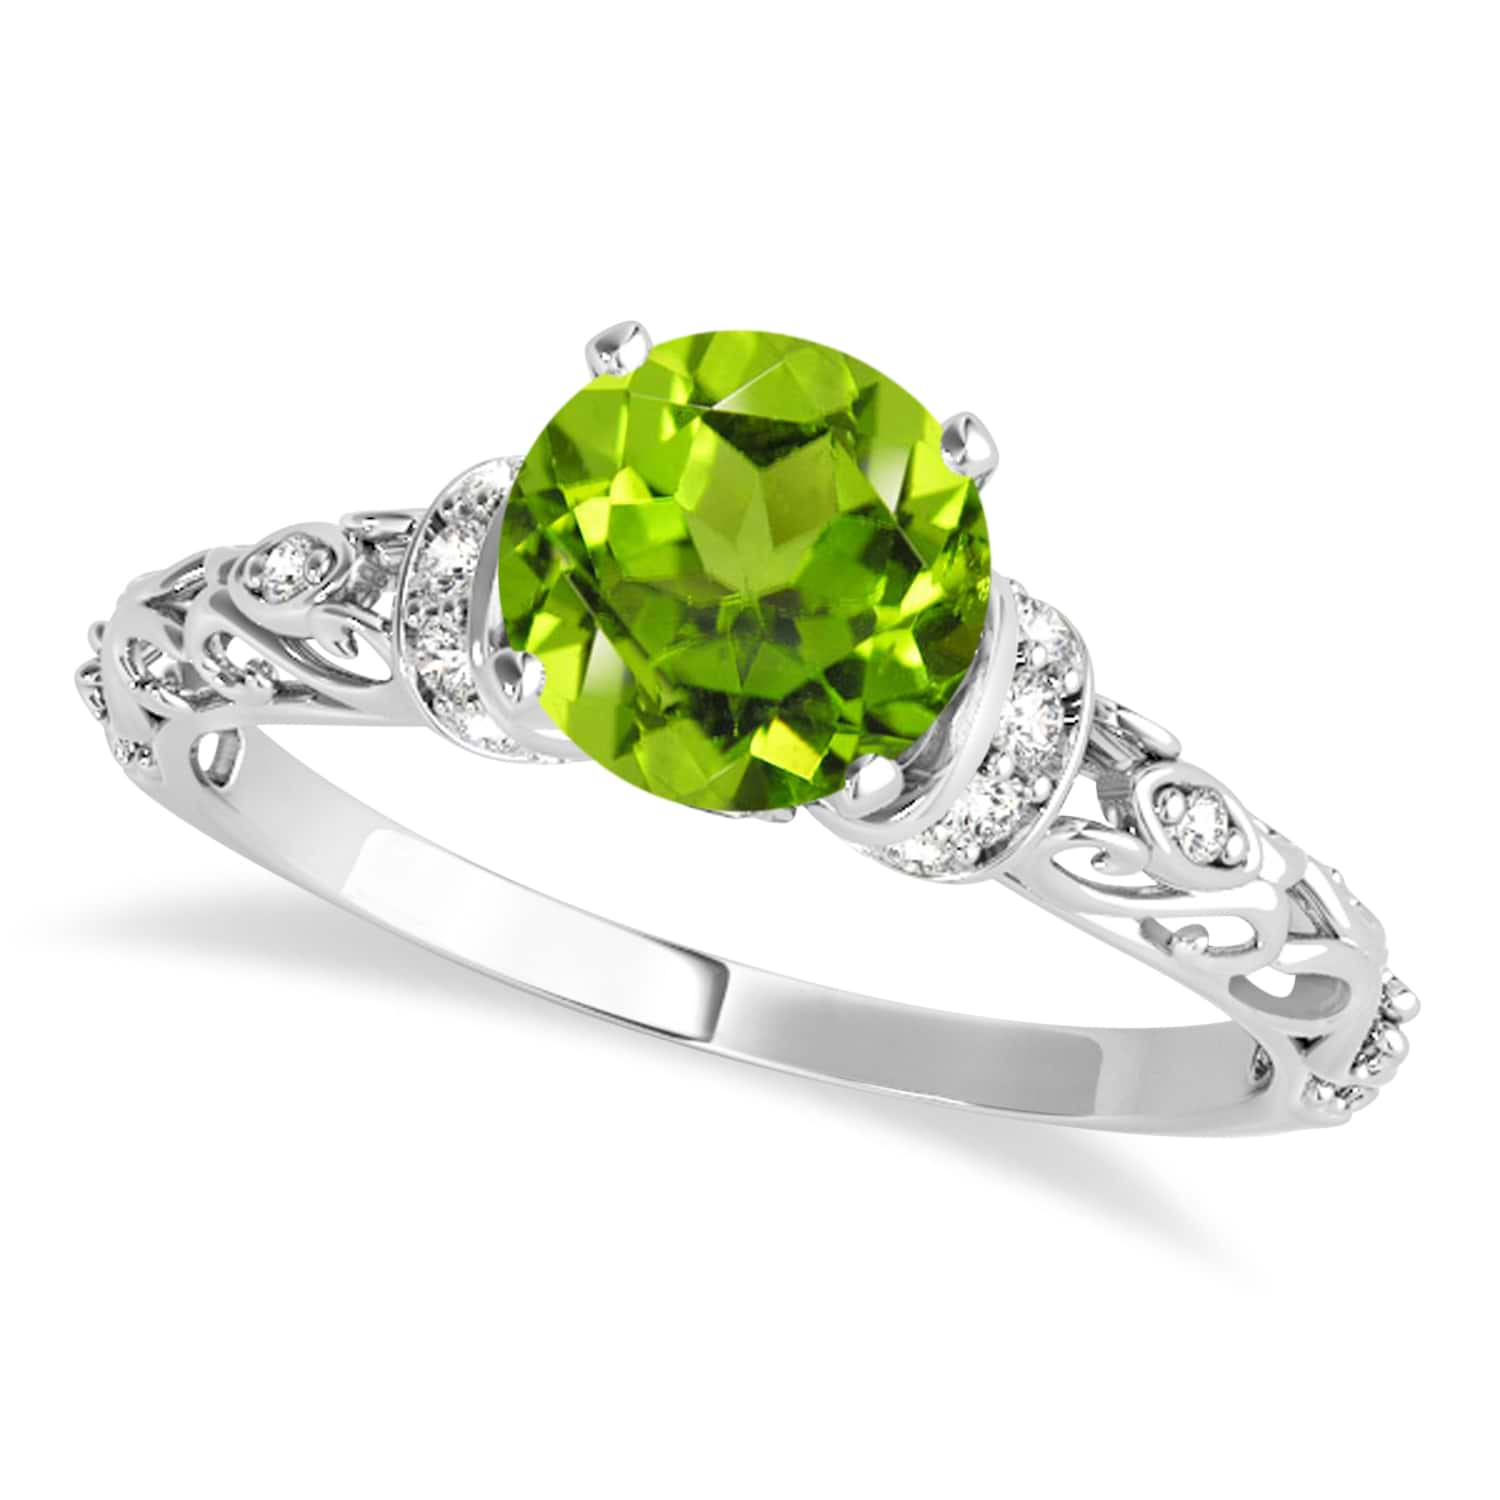 Peridot & Diamond Antique Style Engagement Ring 14k White Gold (0.87ct)